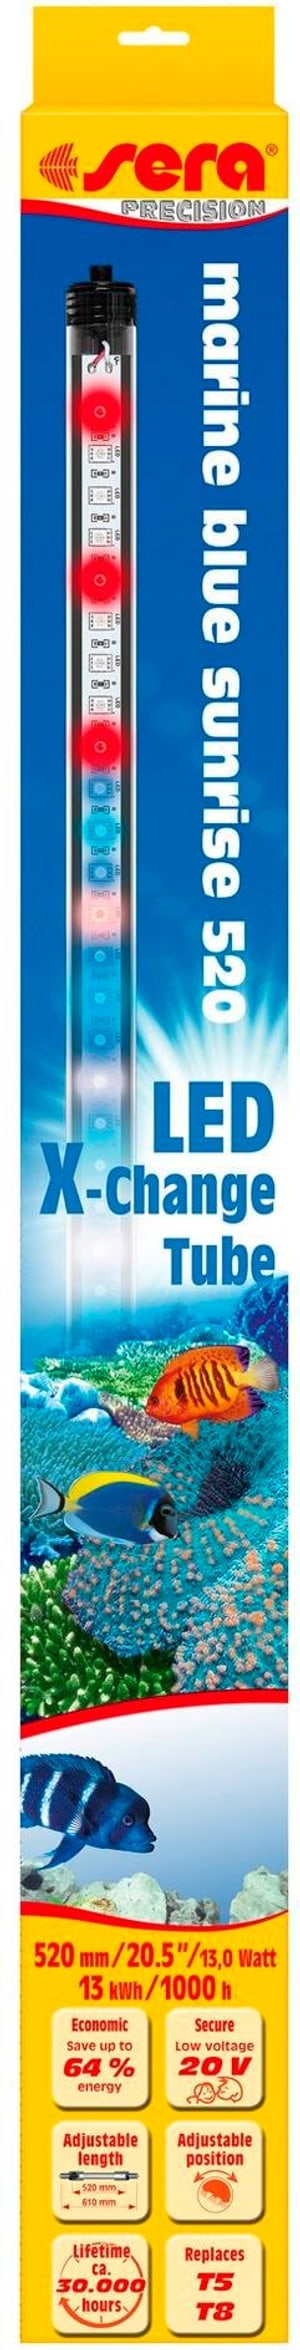 Ampoule LED X-Change Tube MBS, 520 mm